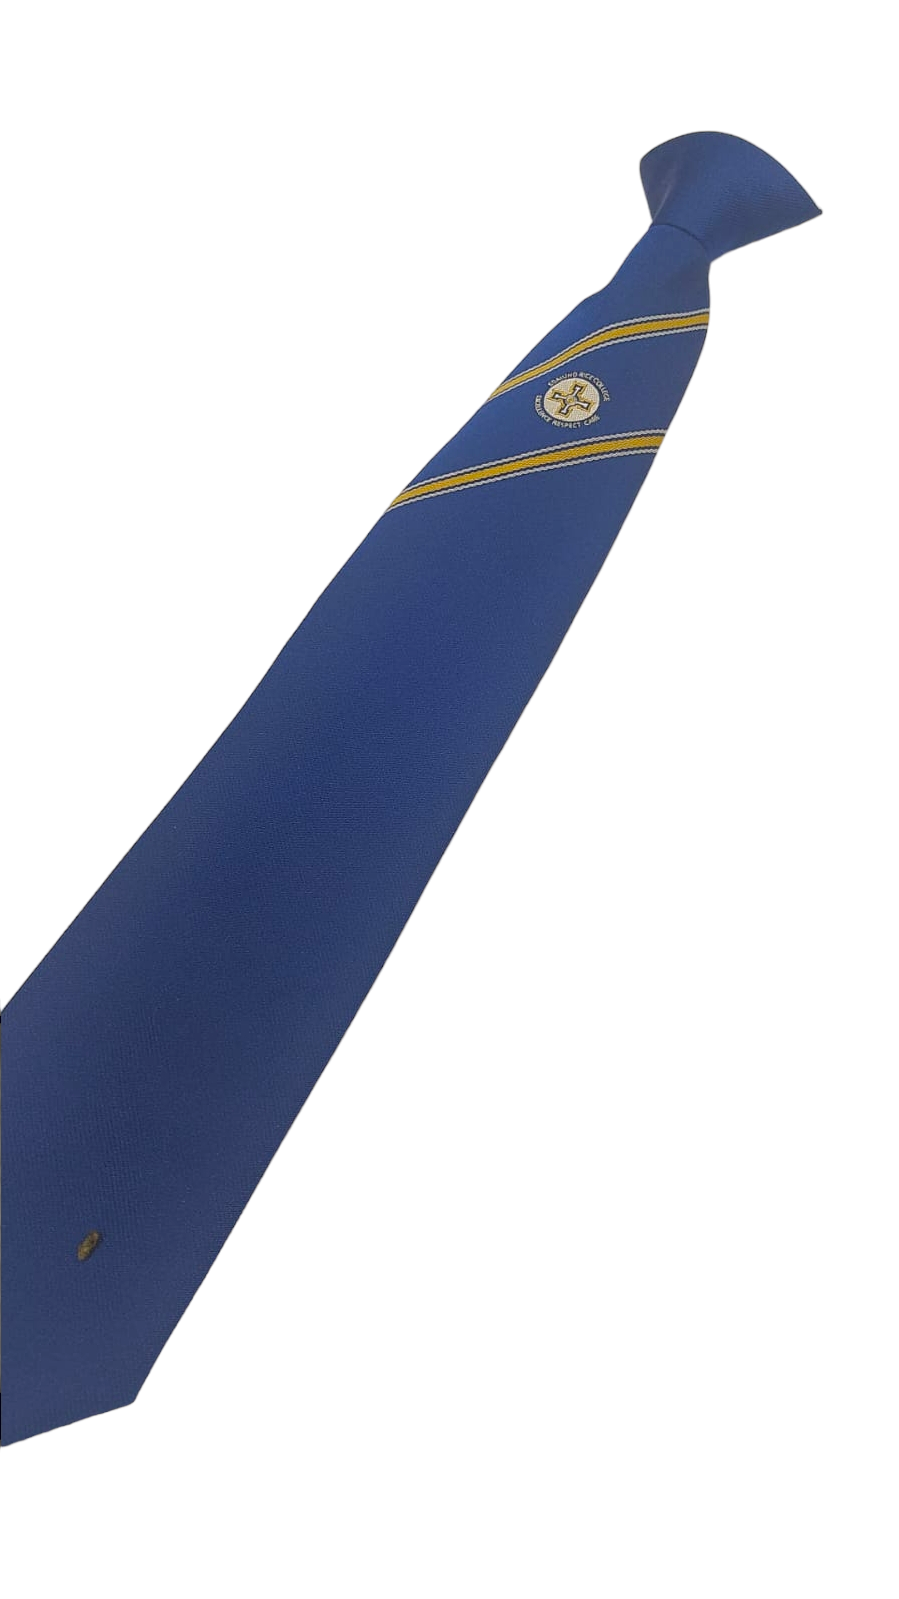 Edmund Rice Senior Tie